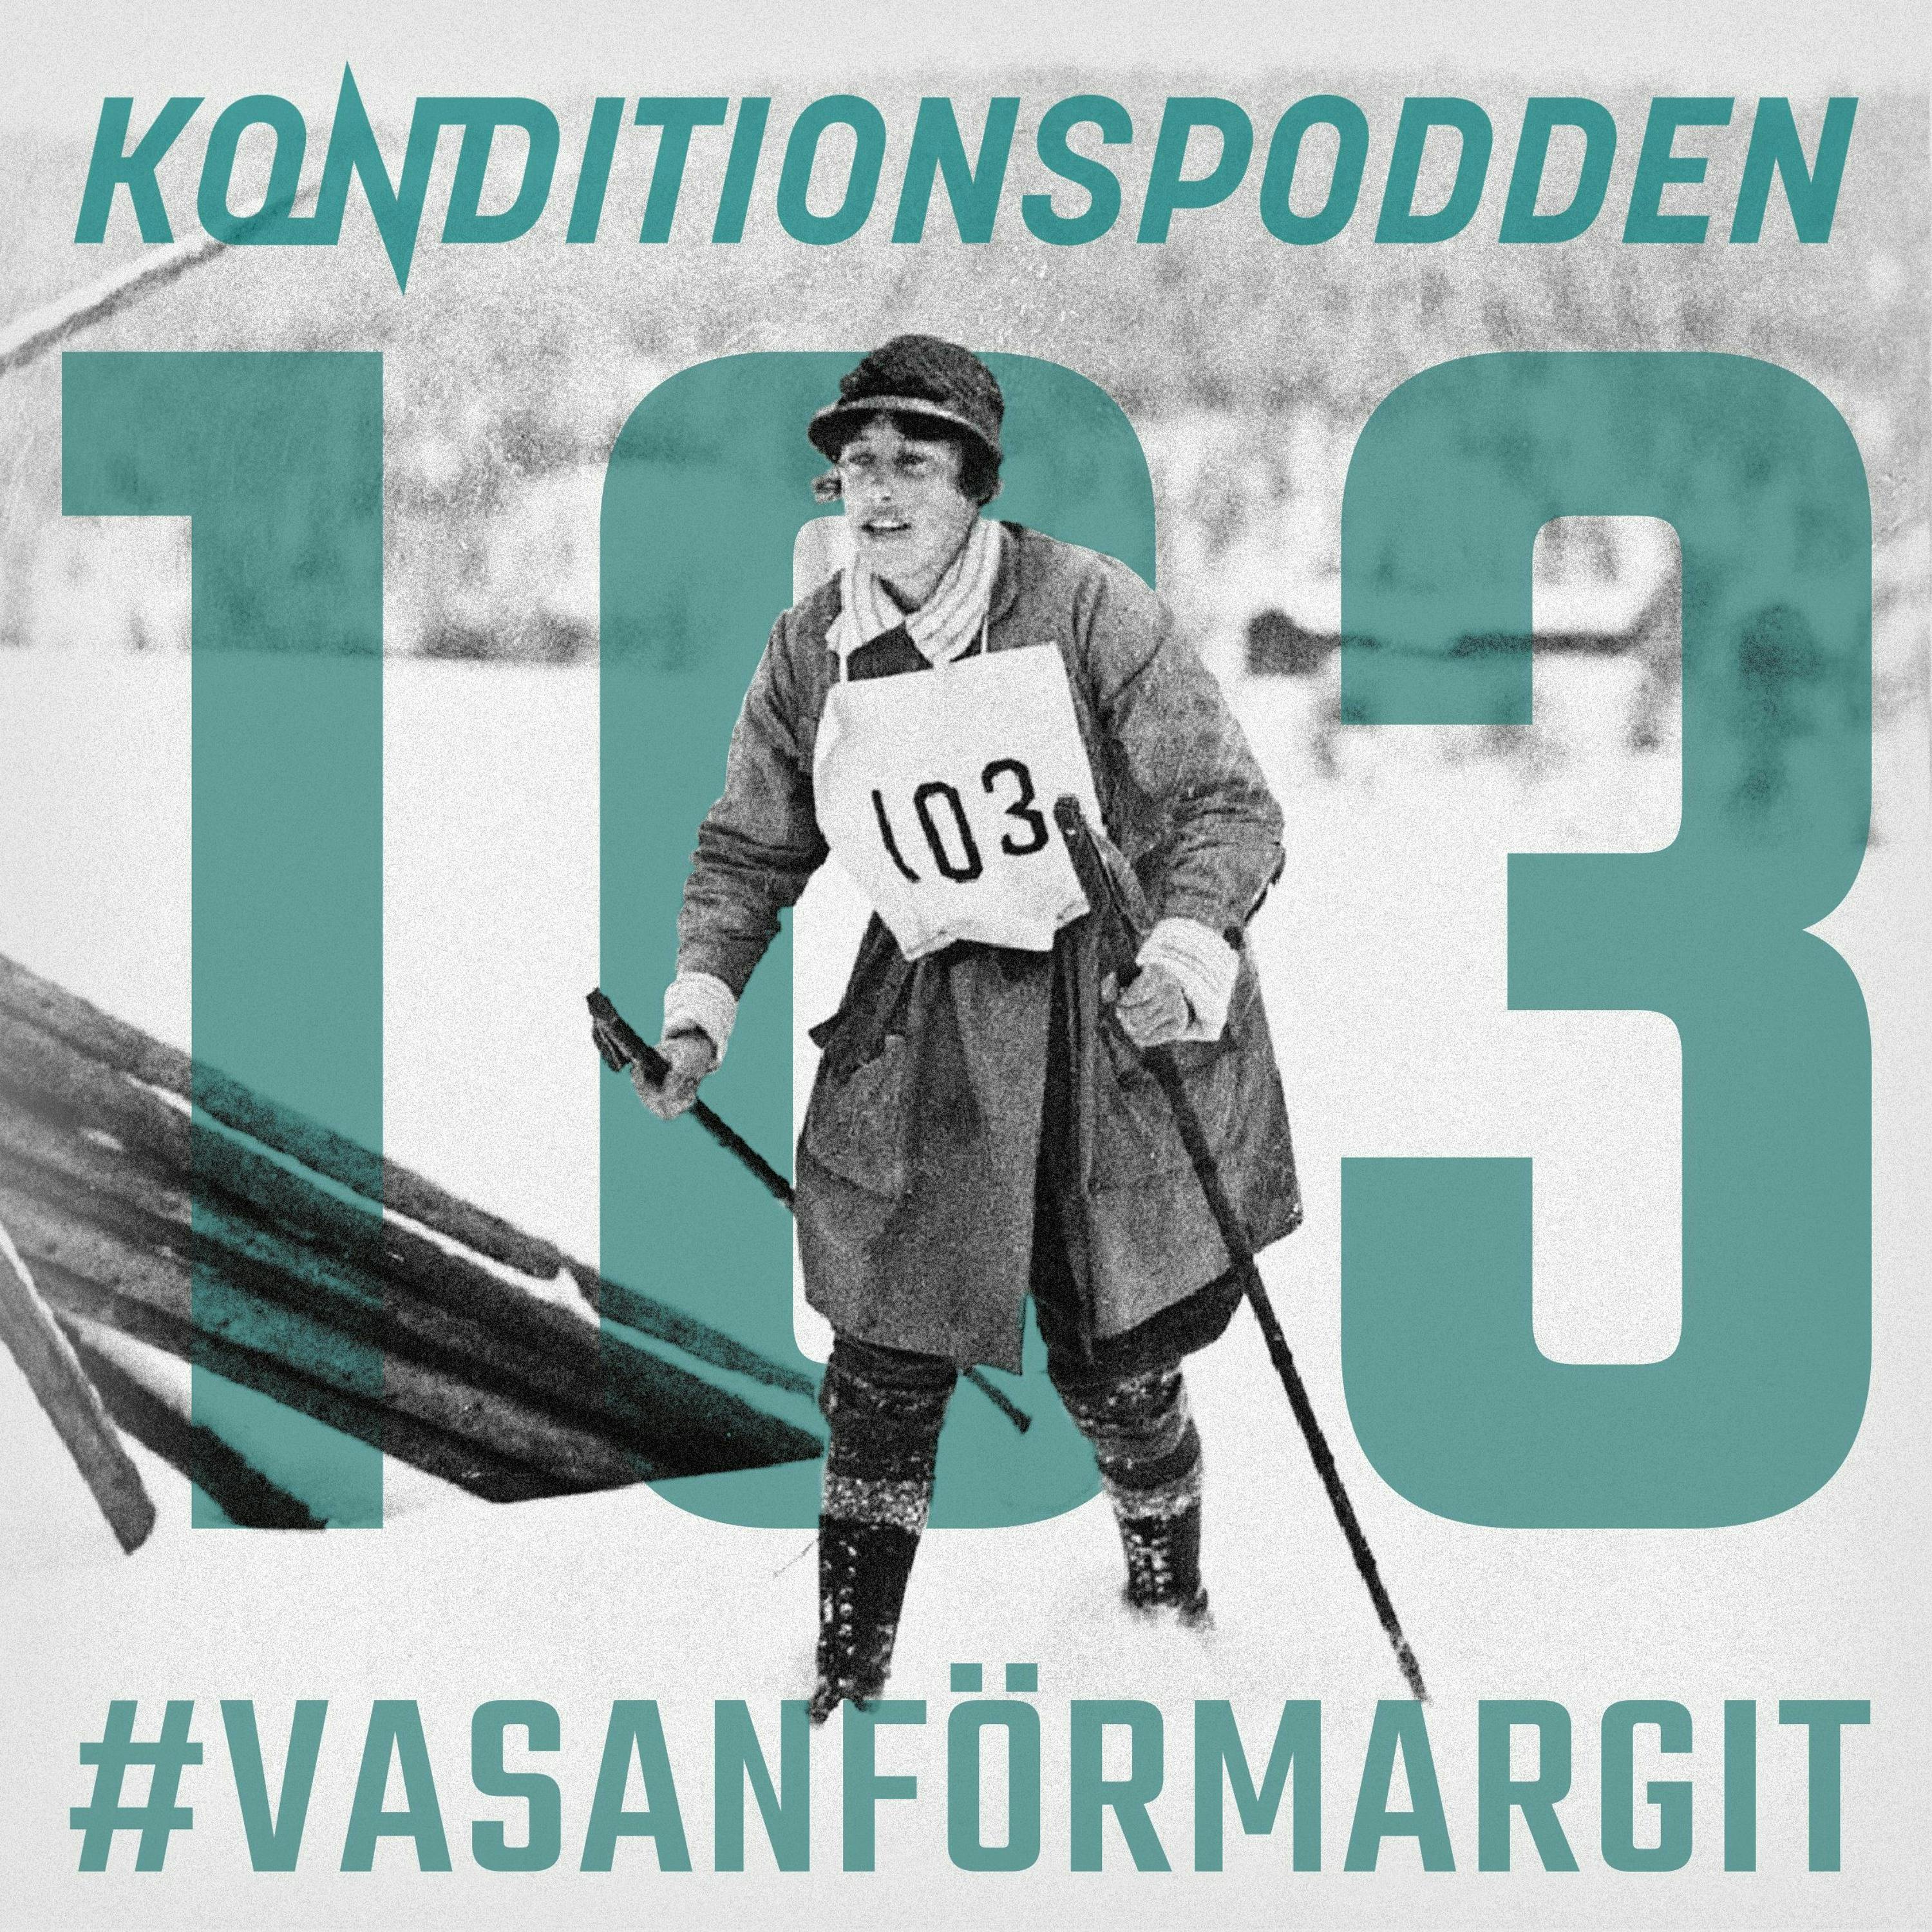 S9A6 Vasan För Margit